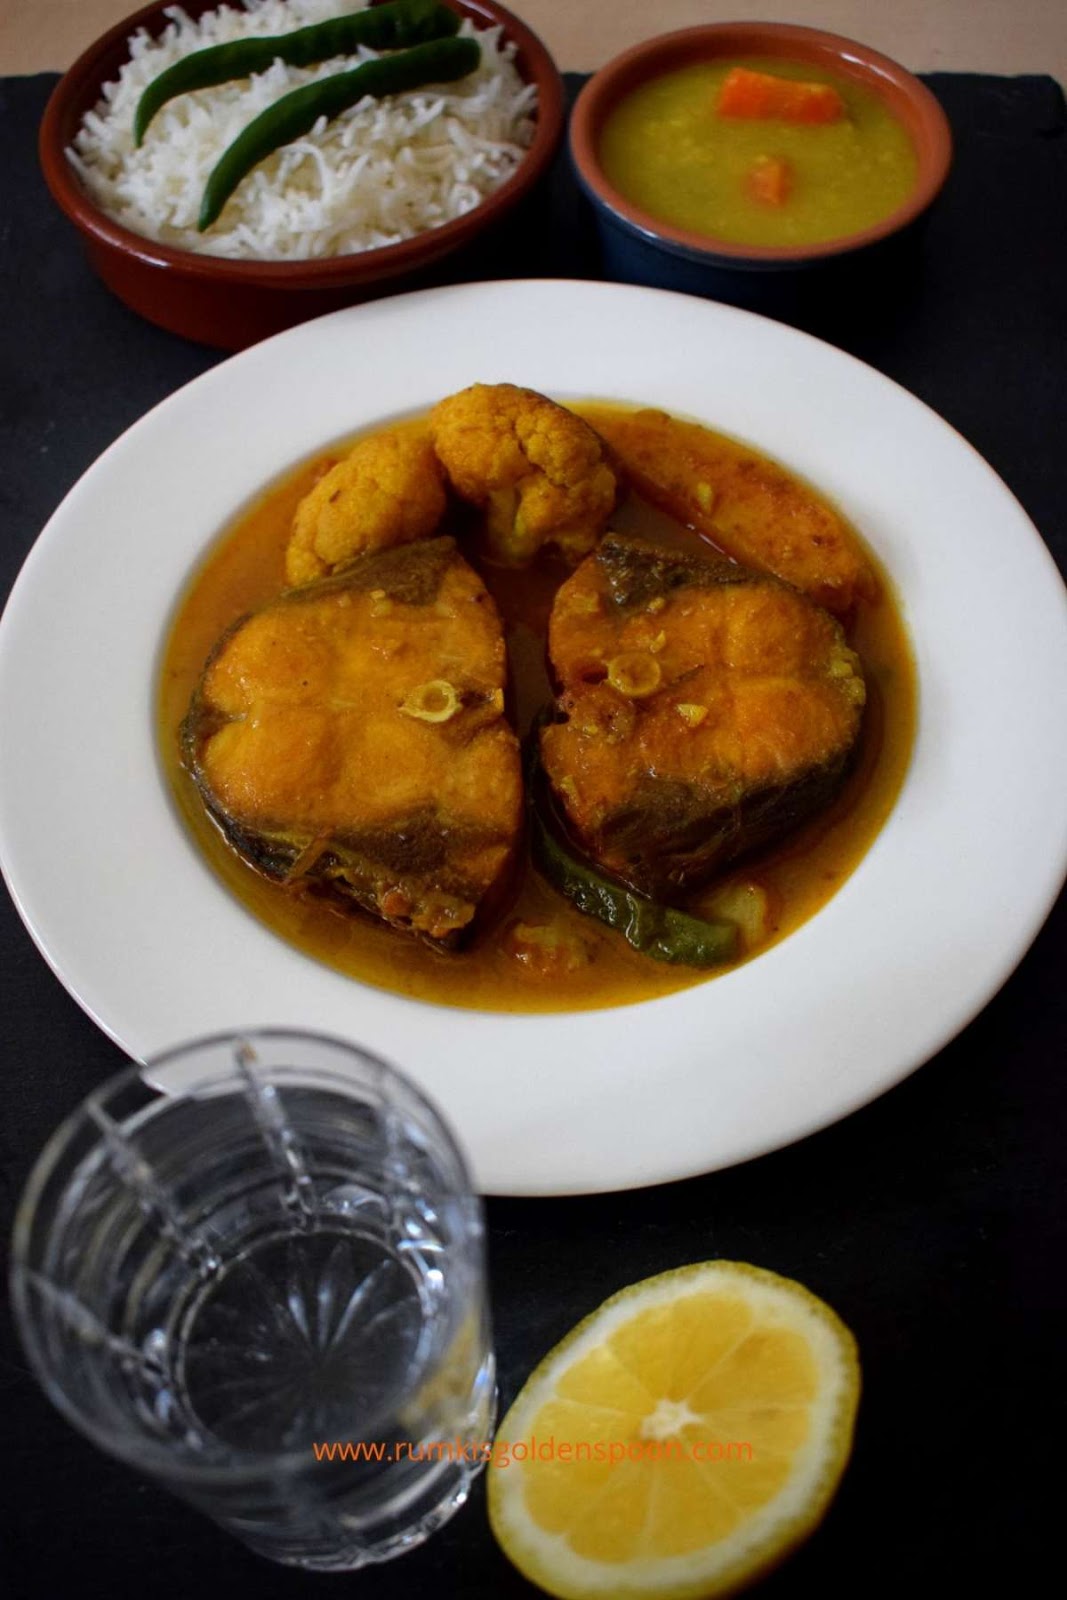 bengali fish curry, bengali fish curry recipe, recipe for bengali fish curry, rohu fish curry, recipe for rohu fish curry, how to make rohu fish curry, rui macher jhol, rui macher patla jhol, fulkopi diye macher jhol, fulkopi diye rui macher jhol, Rumki's Golden Spoon